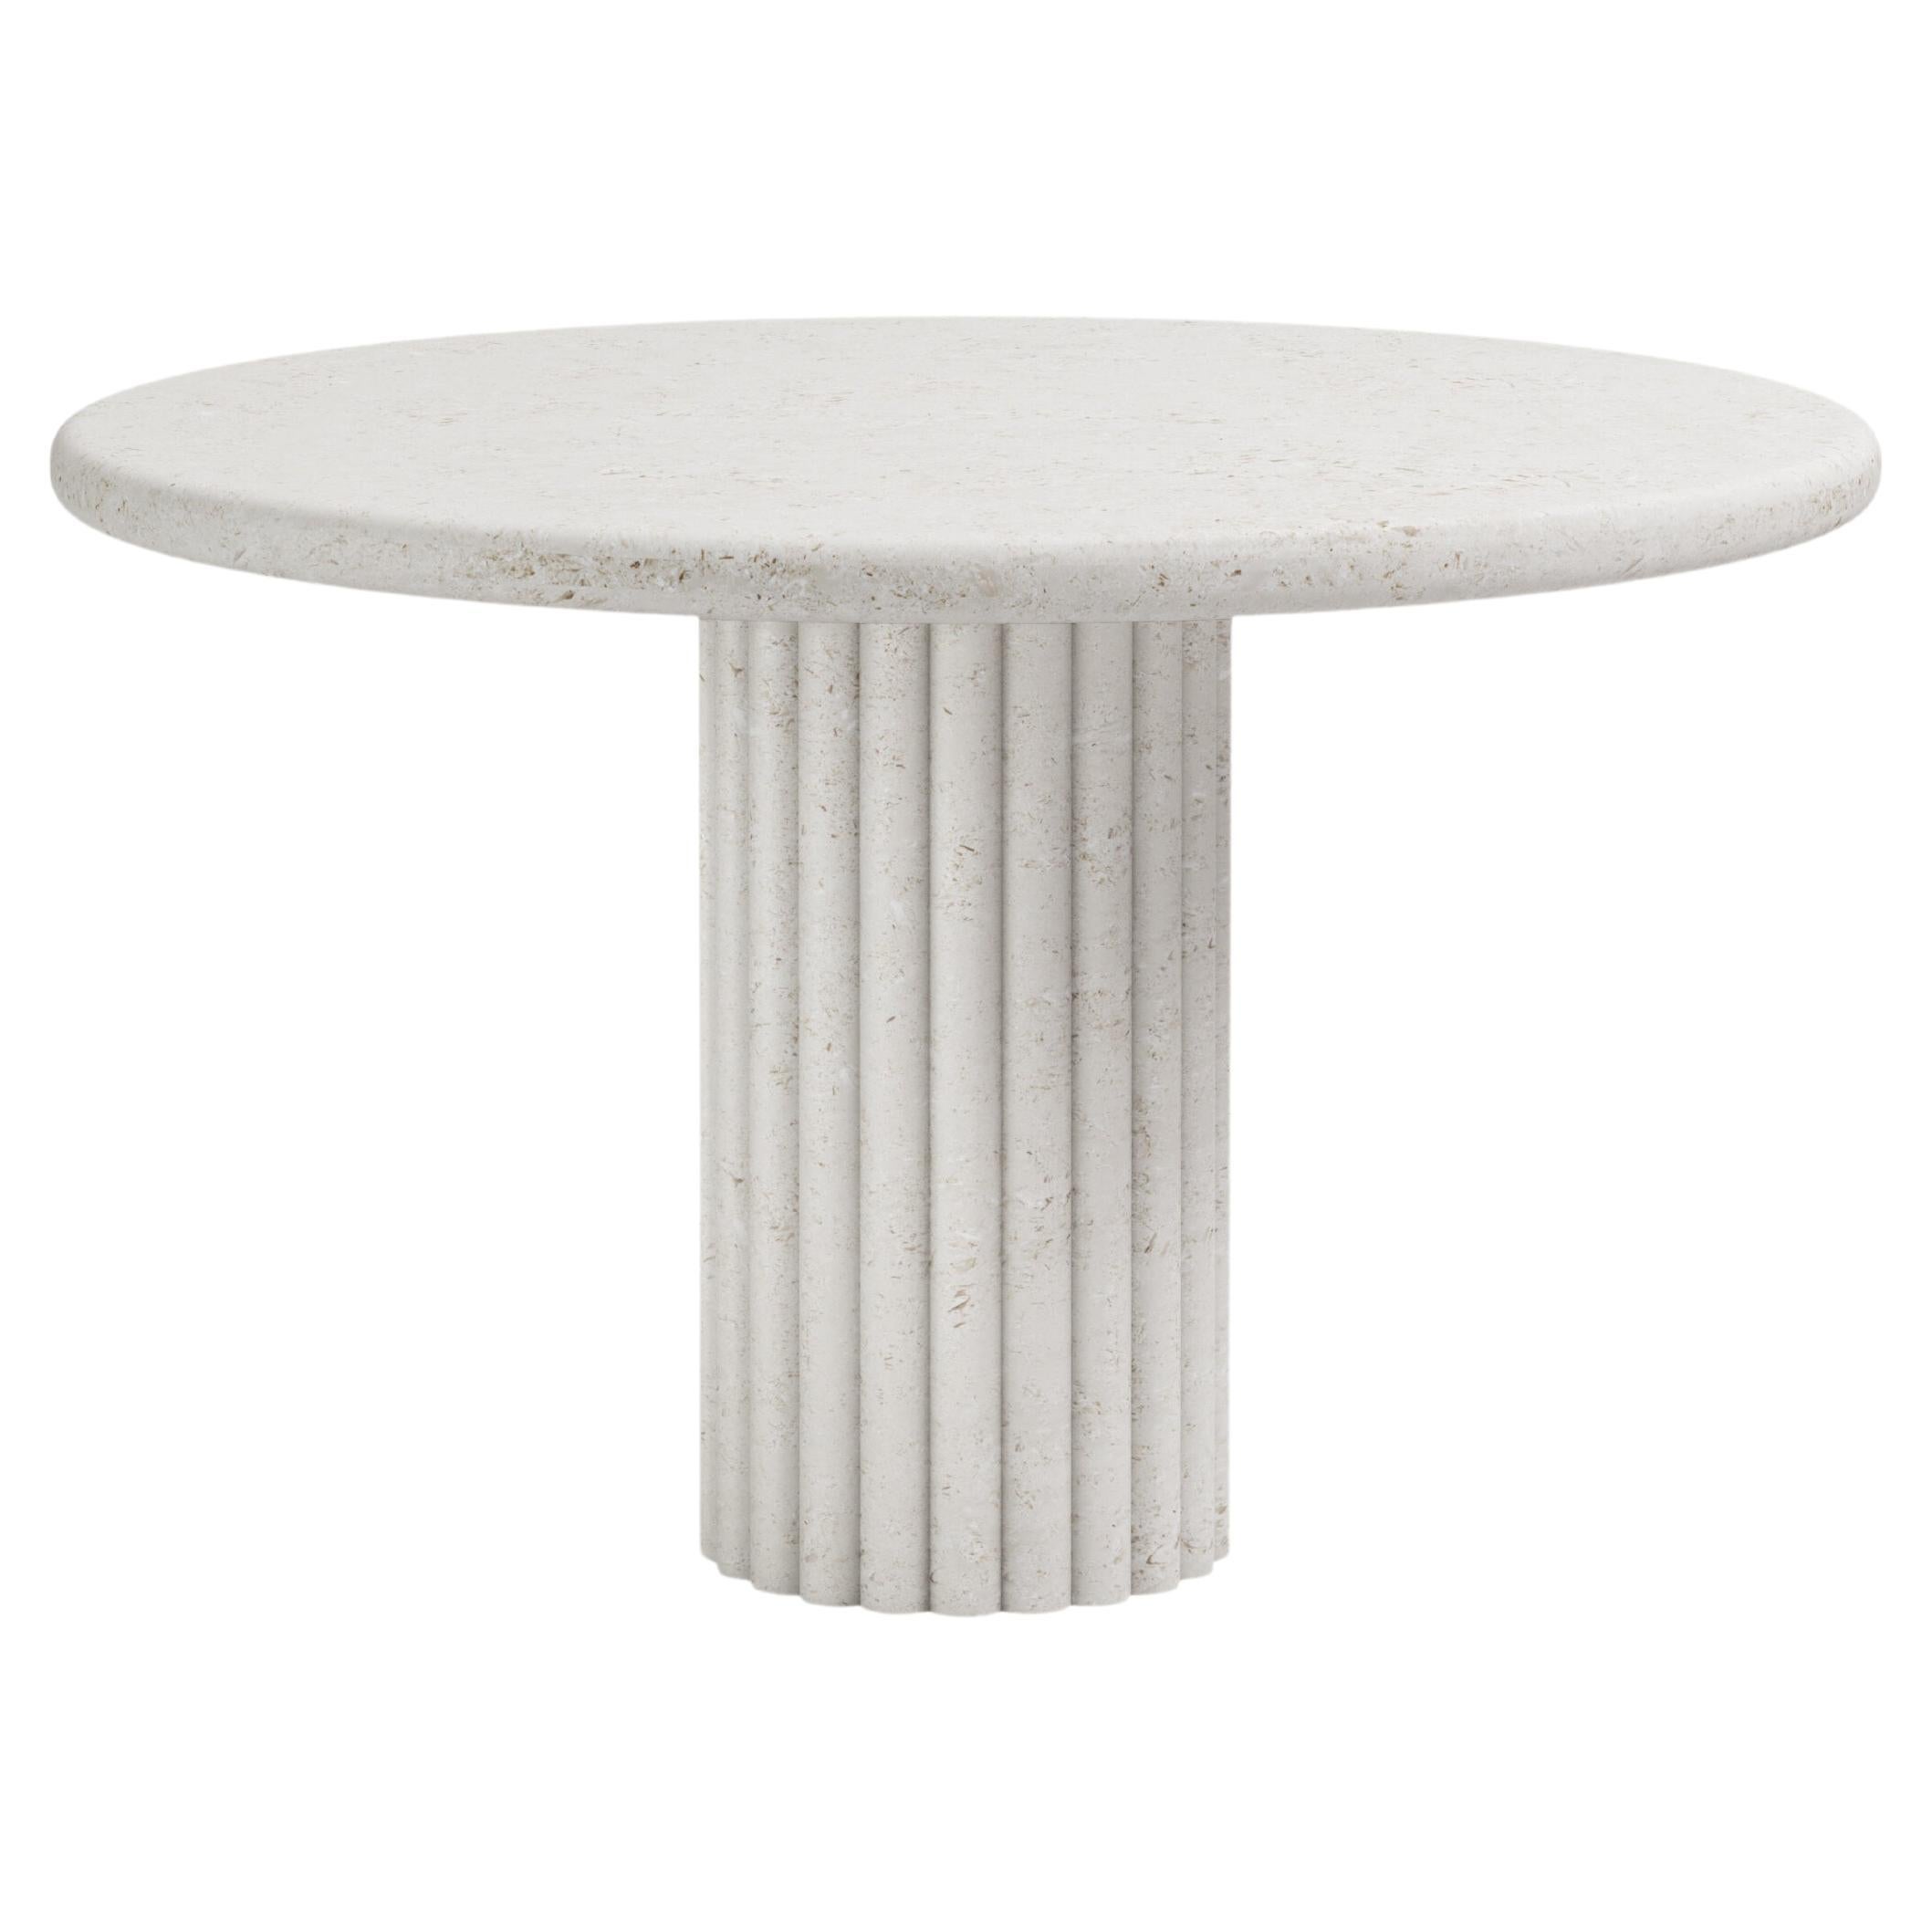 FORM(LA) Fluta Round Dining Table 42”L x 42”W x 30”H Limestone Oceano For Sale